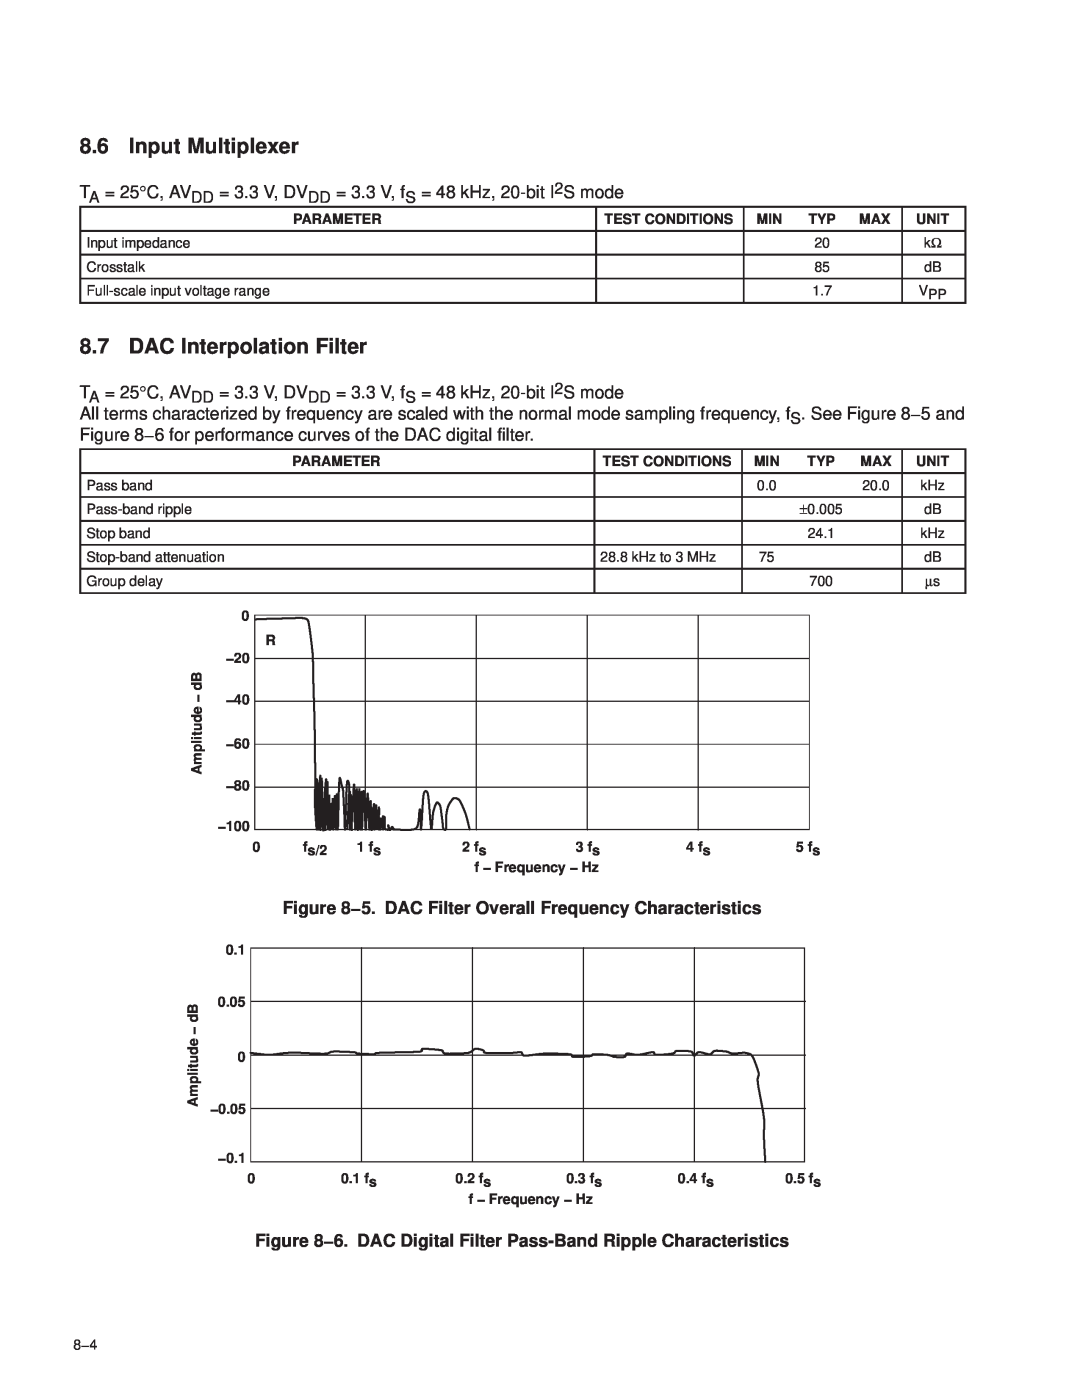 Texas Instruments TAS3002 manual Input Multiplexer, DAC Interpolation Filter 